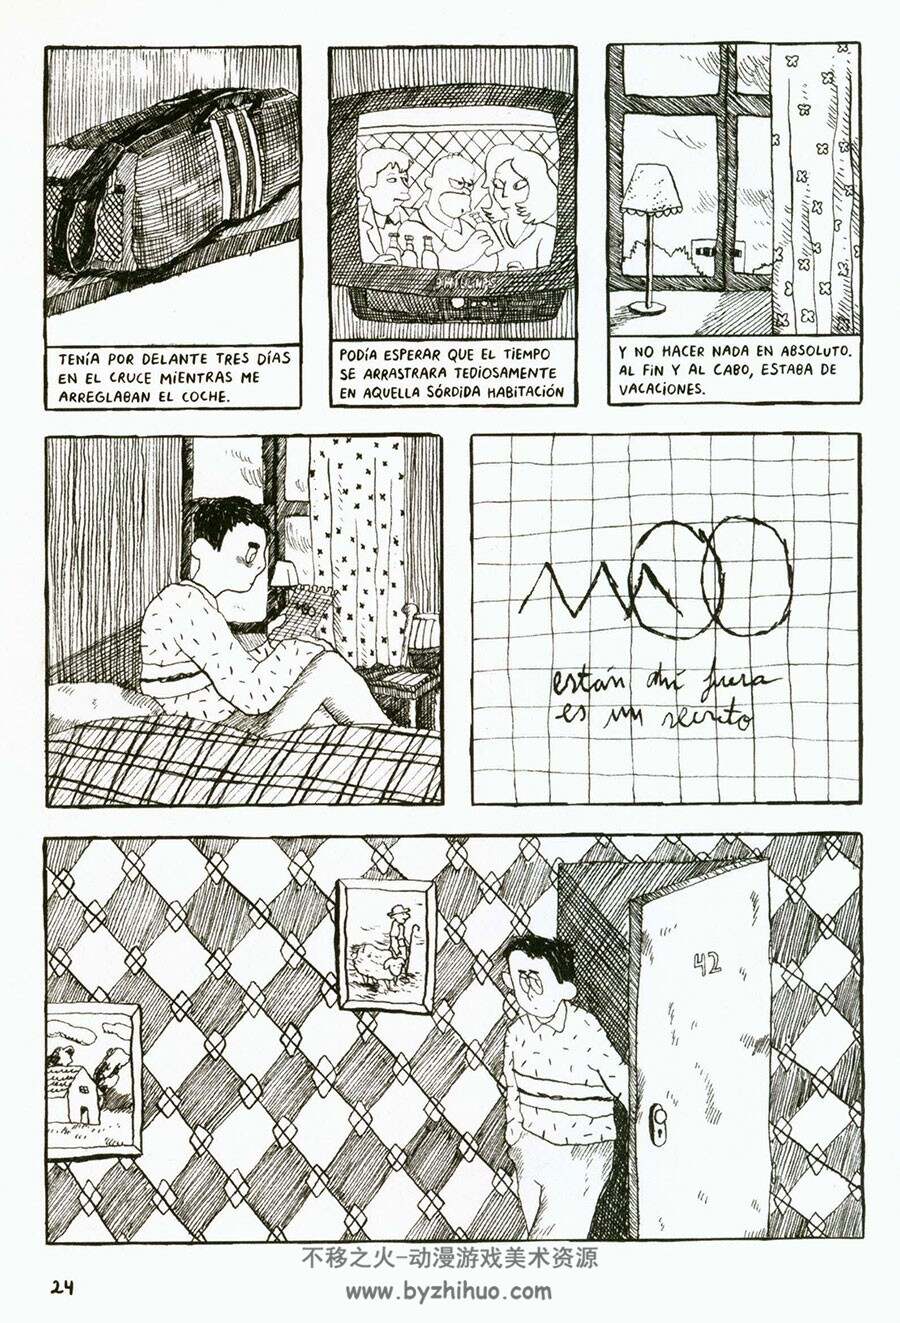 Encuentros cercanos, de Anabel Colazo 全一册 Anabel Colazo Limón 黑白西班牙语漫画